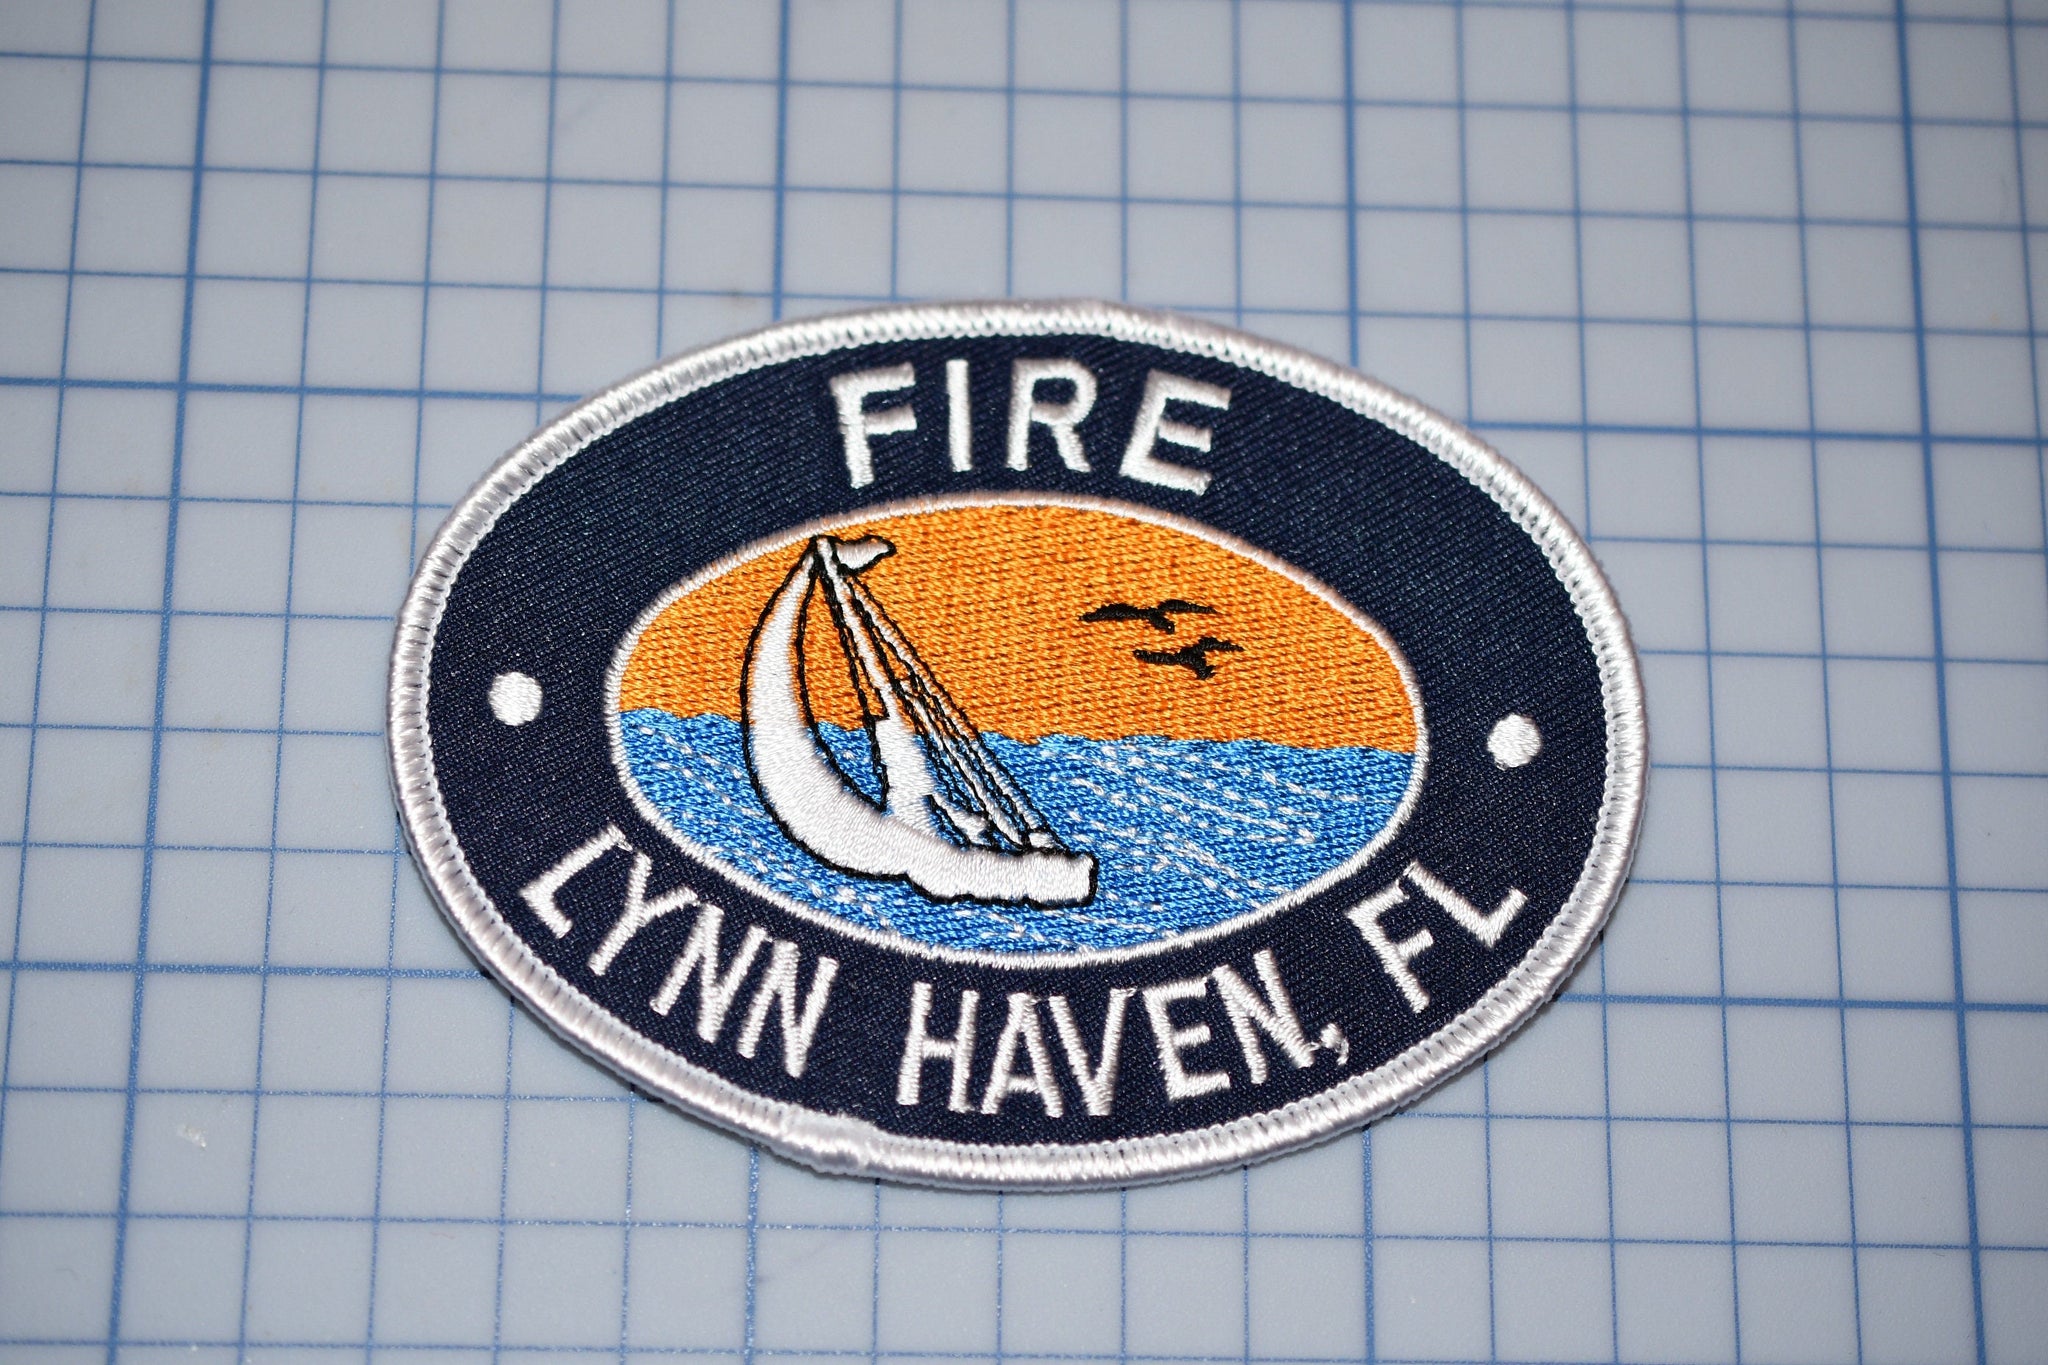 Lynn Haven Florida Fire Department Patch (S4-282)